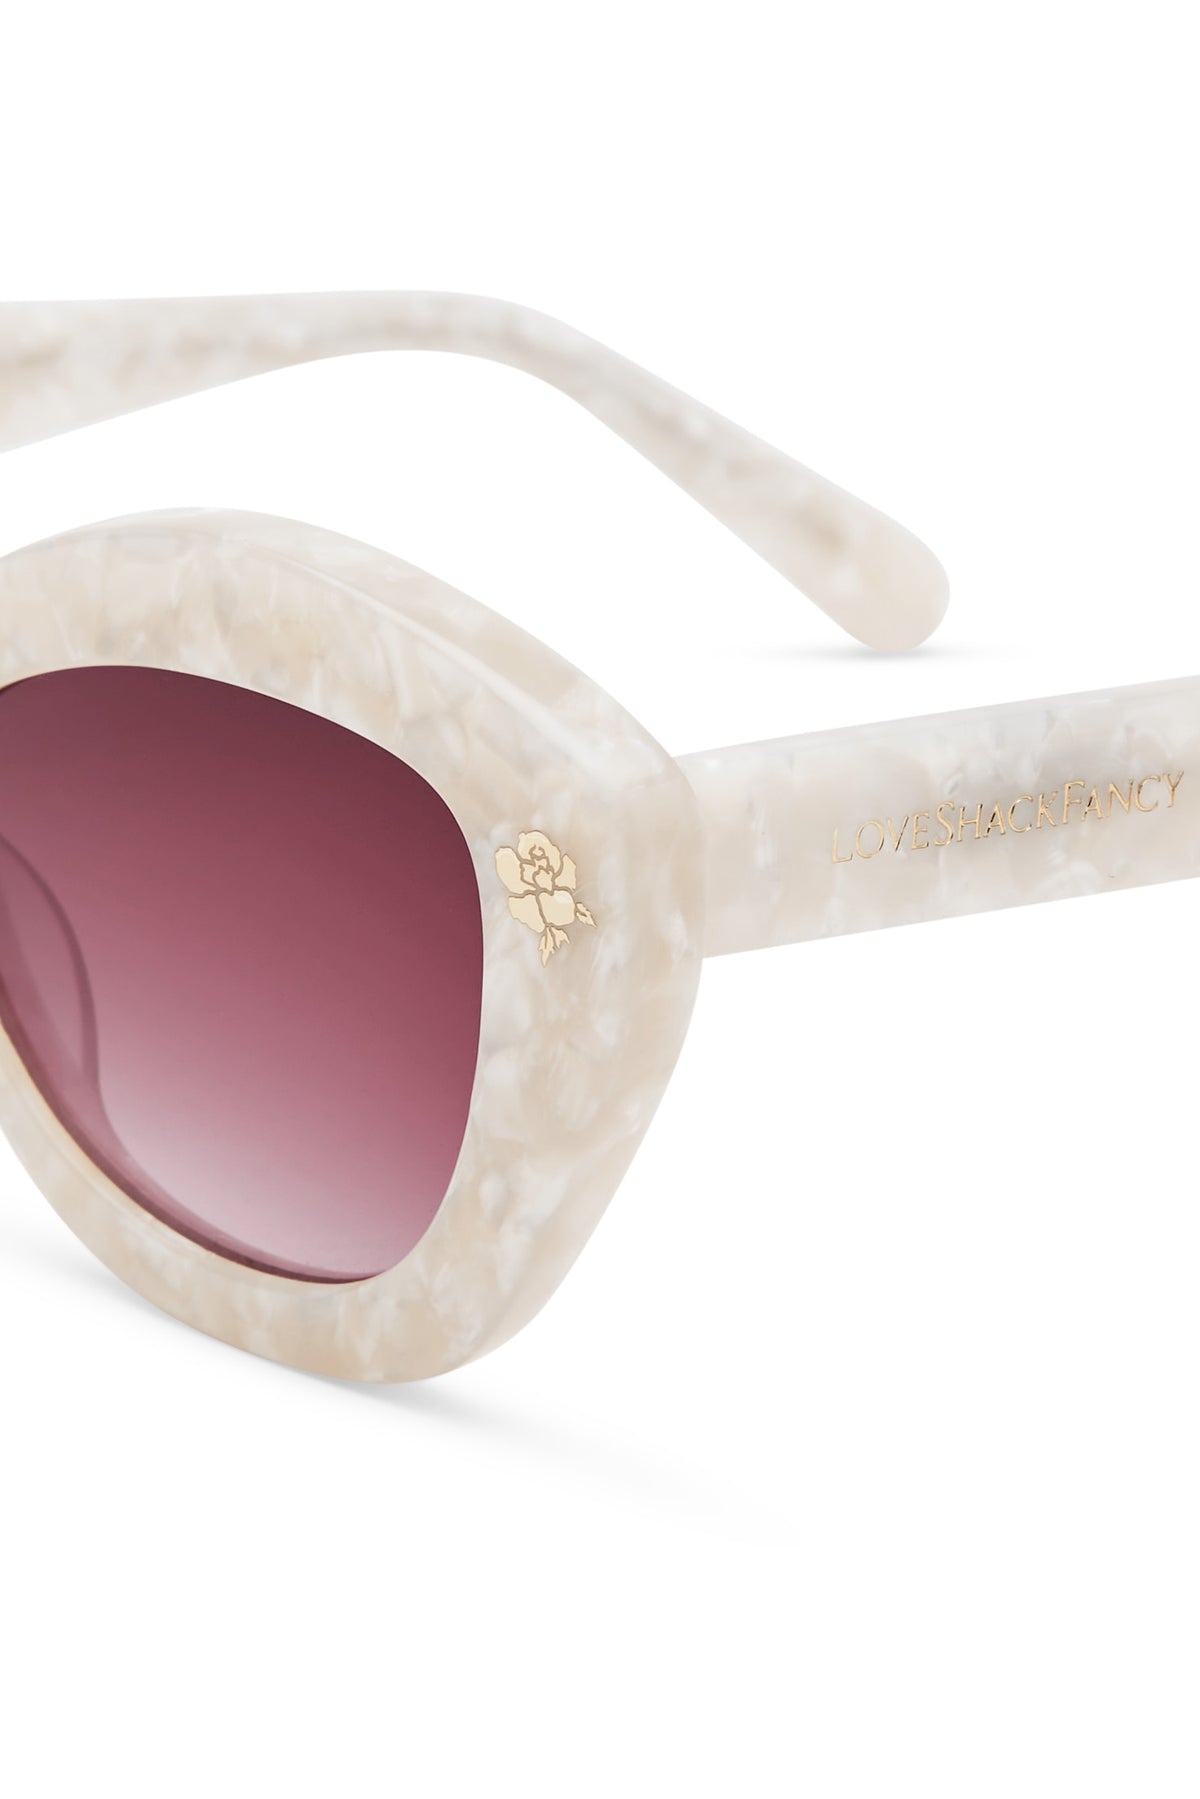 Hessel Sunglasses Women's Accessories / Shop Loveshackfancy.com